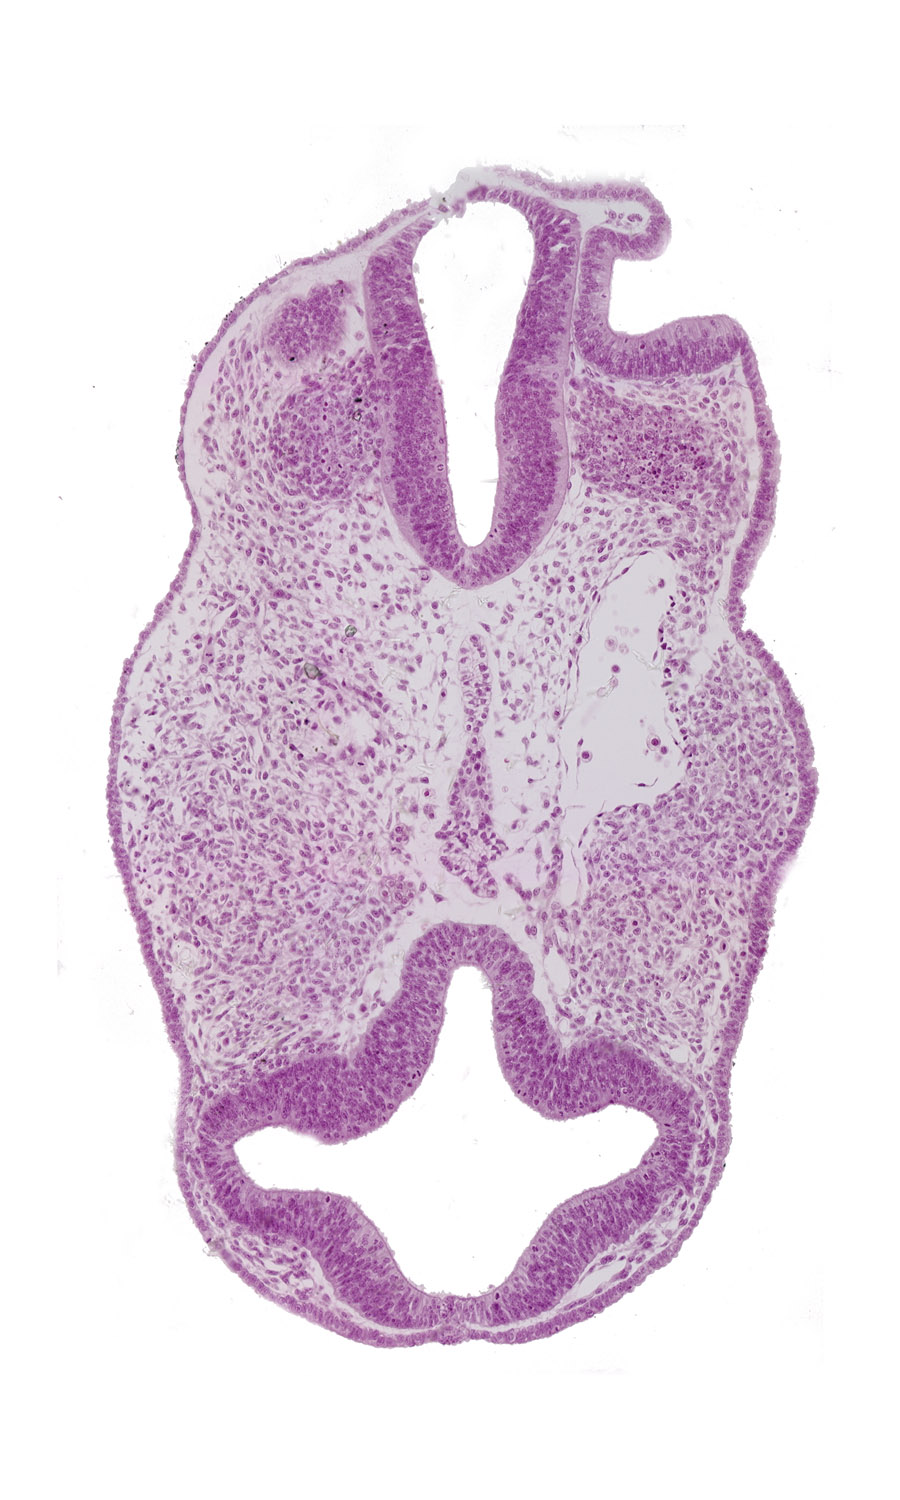 diencephalon (D1), diencephalon (D2), dorsal aorta, facio-vestibulocochlear neural crest (CN VII and CN VIII), optic vesicle (D1), otic pit, prosencoel (third ventricle), rhombencephalon (Rh. 4), surface ectoderm